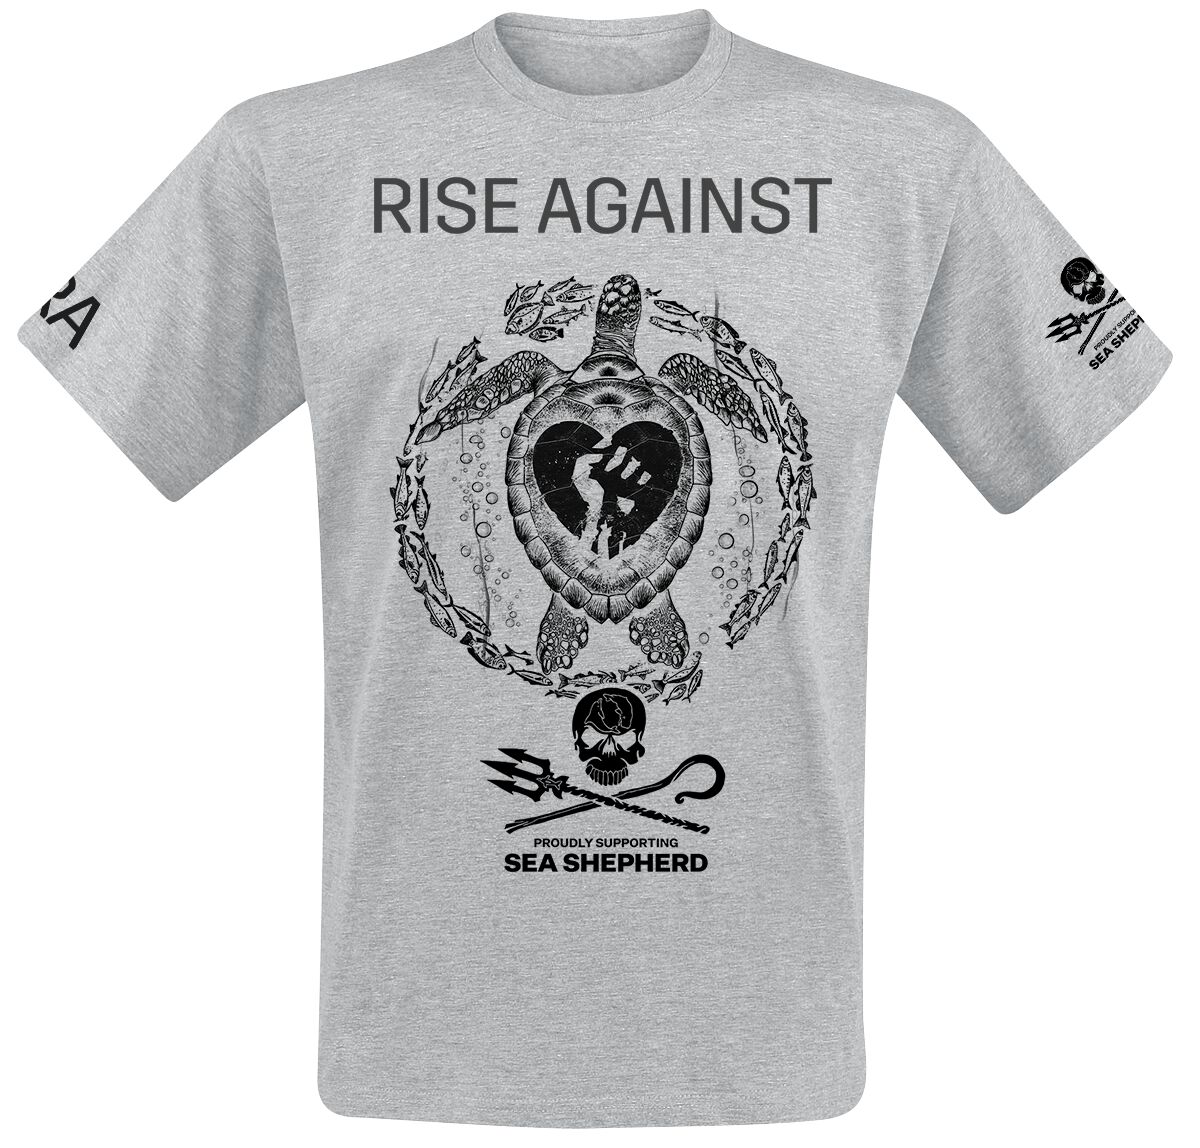 Rise Against T-Shirt - Sea Shepherd Cooperation - Our Precious Time Is Running Out - S bis 3XL - für Männer - Größe L - grau meliert  - EMP exklusives